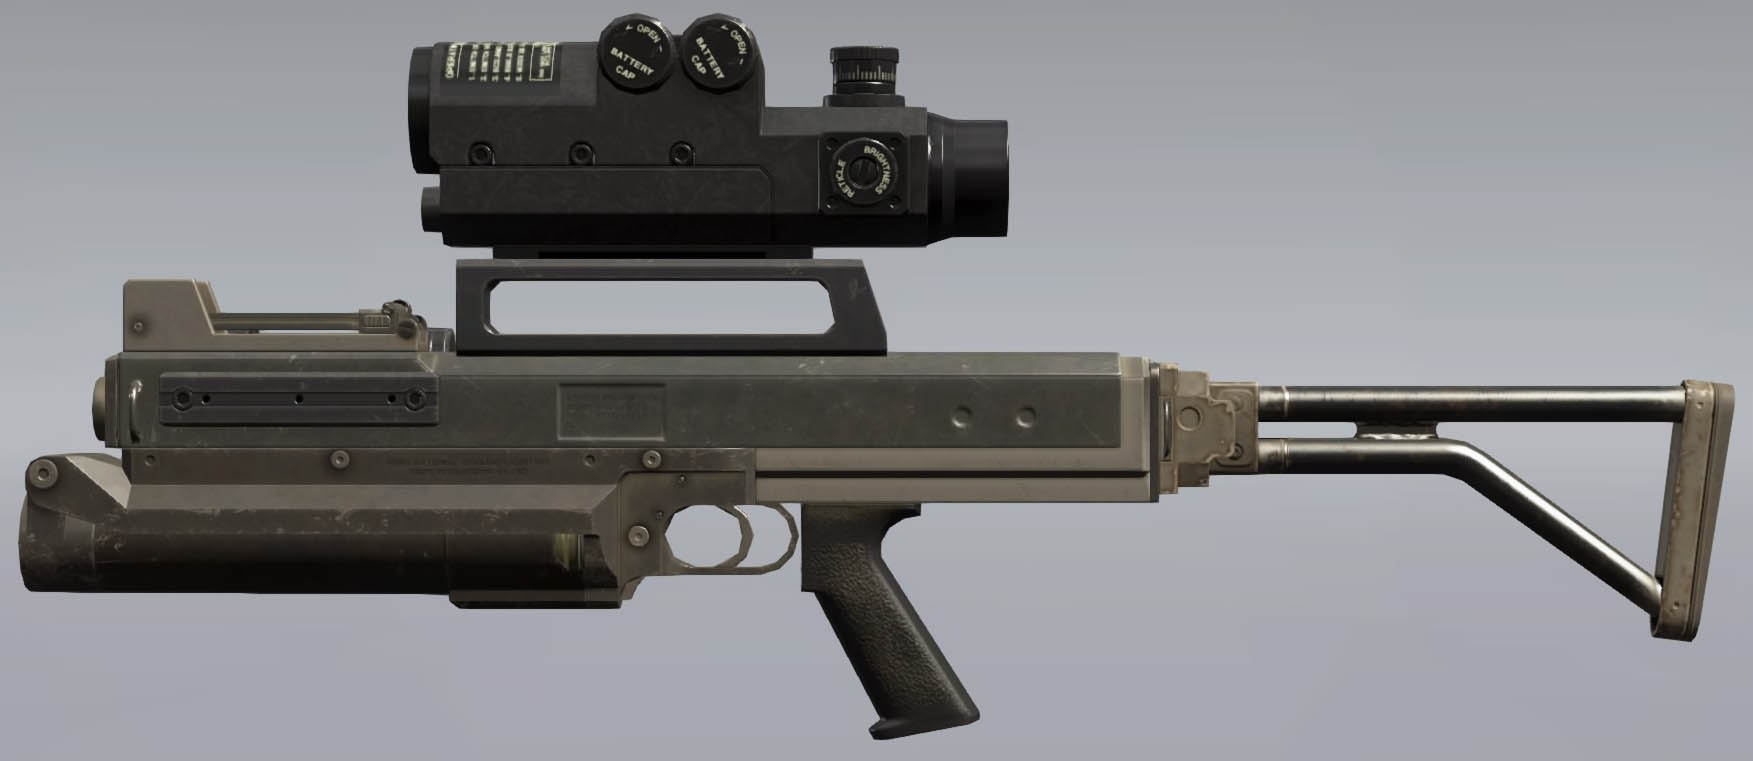 Metal Gear Solid V: The Phantom Pain гранатомёт - DLG 103 (Smoke)